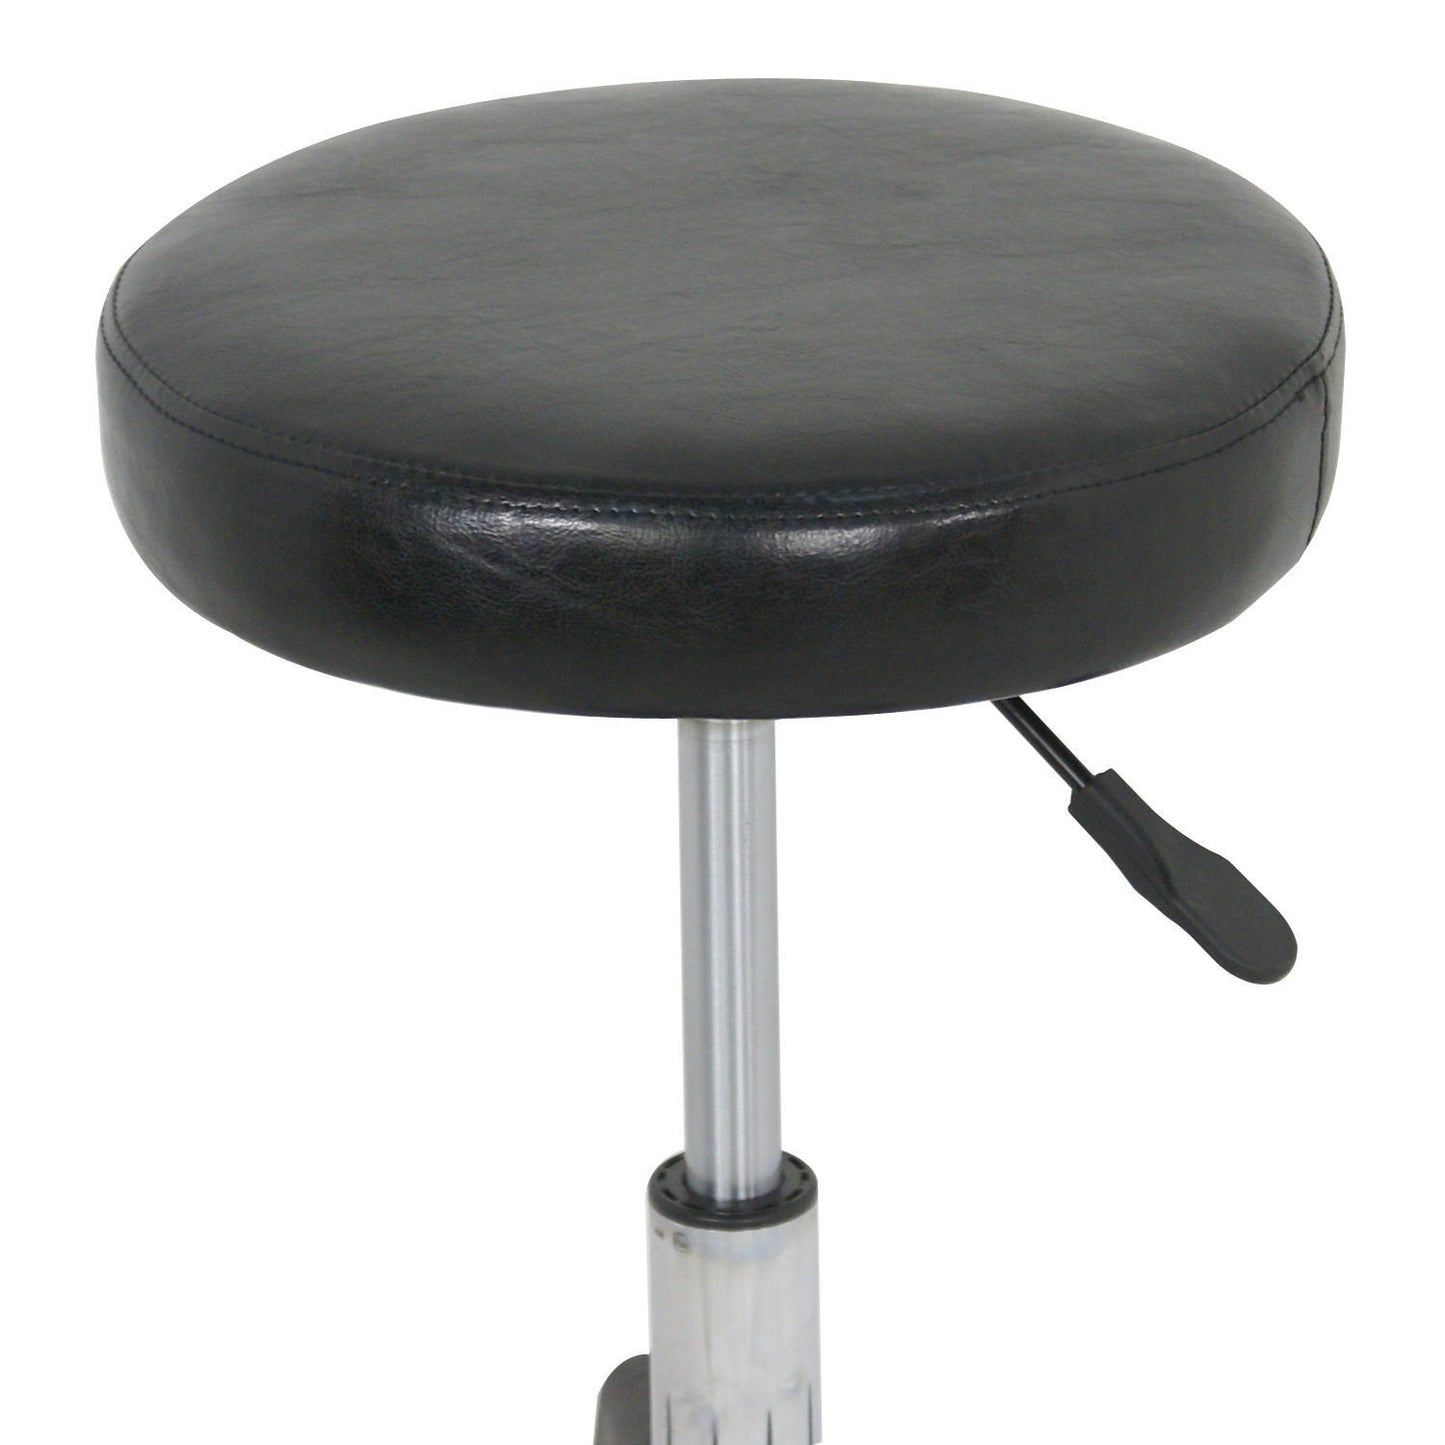 4X Hydraulic Adjustable Stool Facial Salon Massage Spa Swivel Rolling Chair